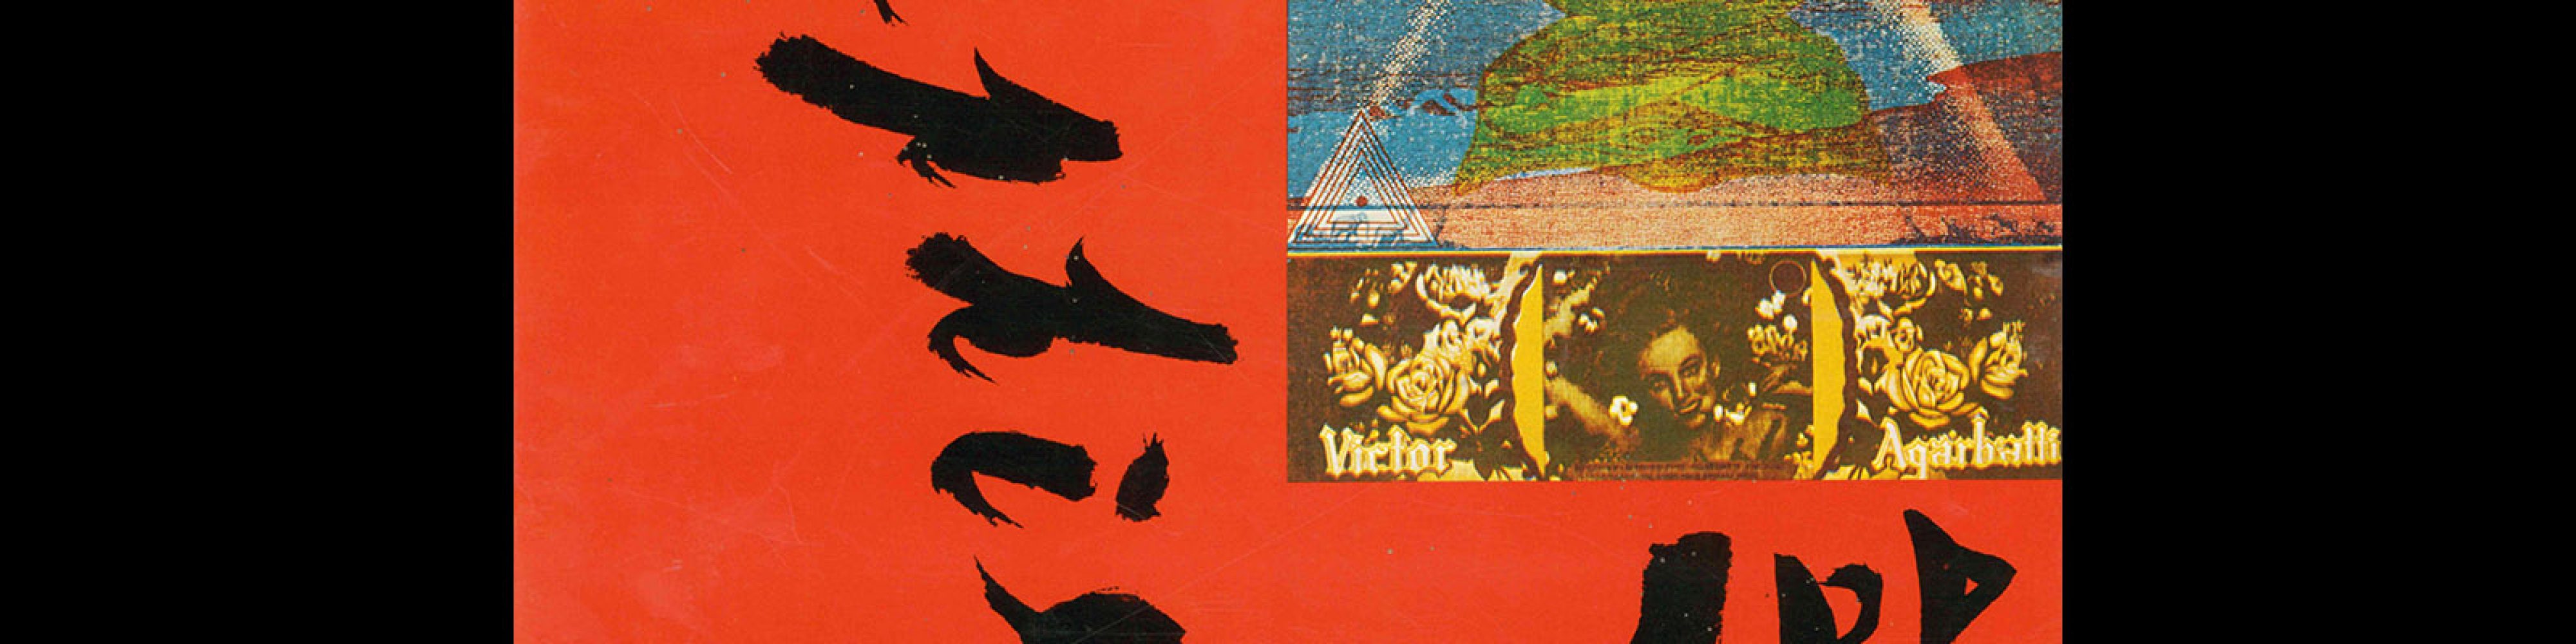 Graphis 188, 1976. Cover design by Tadanori Yokoo